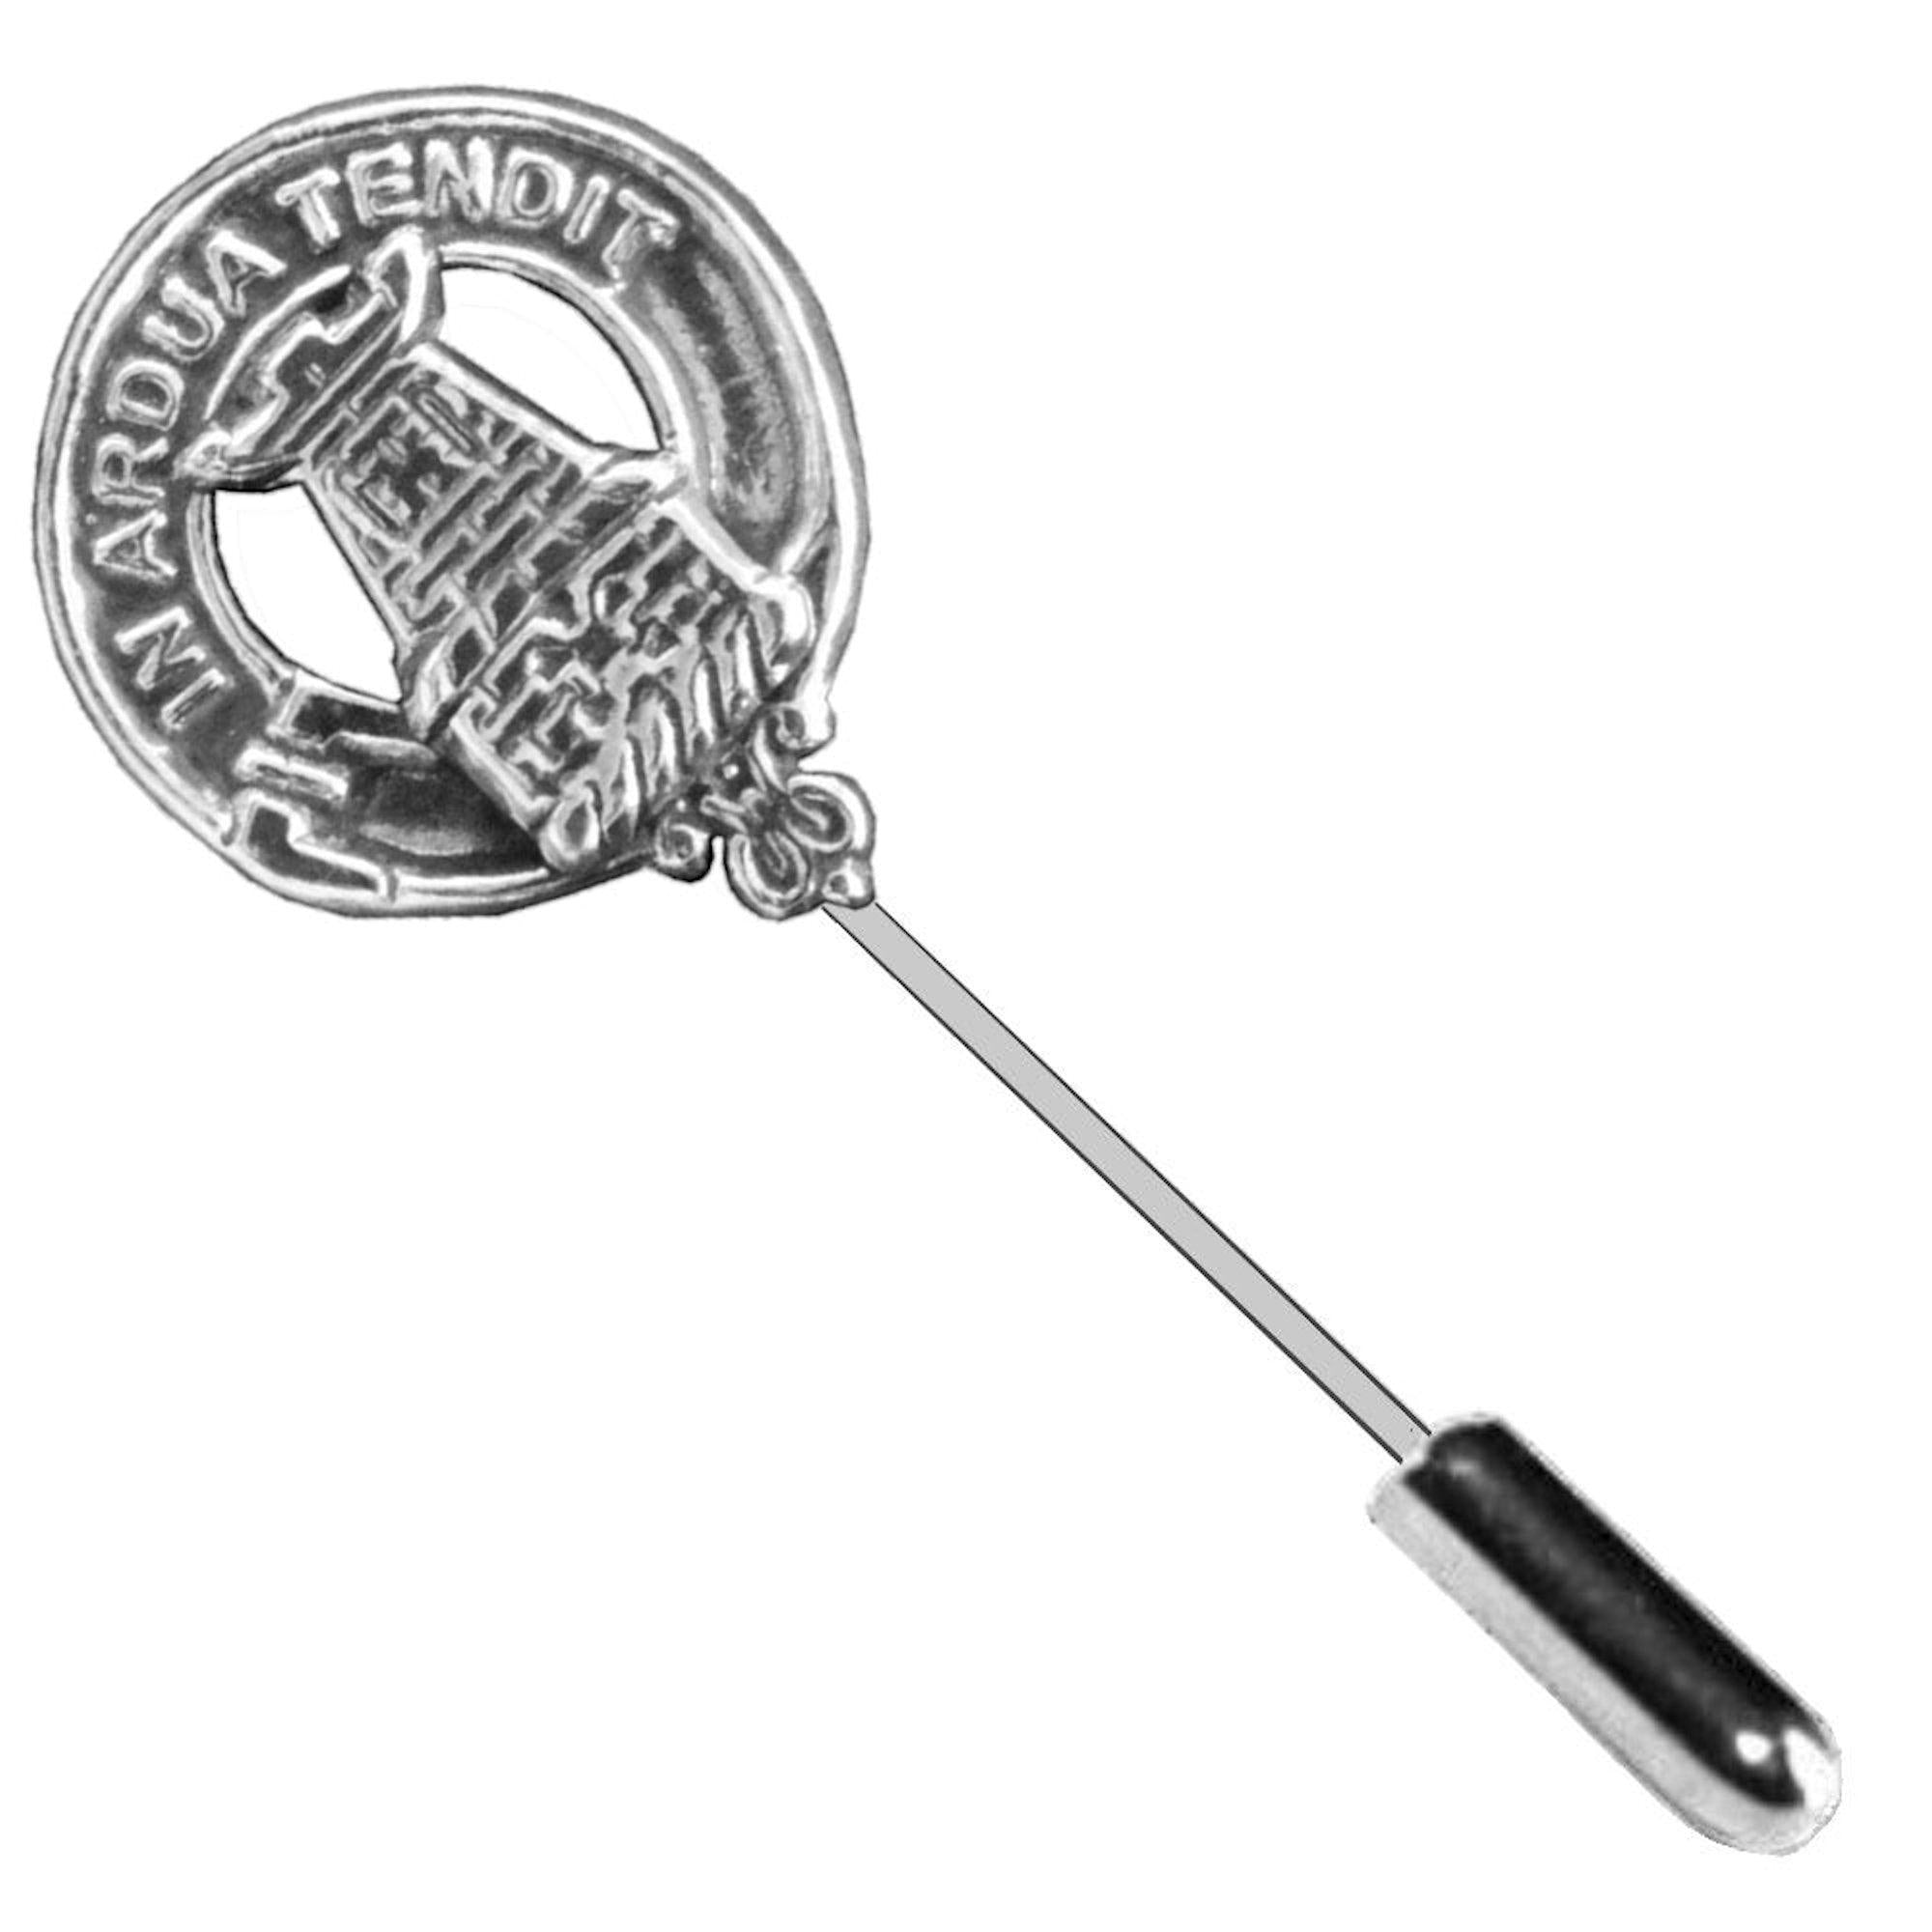 MacCallum Clan Crest Stick or Cravat pin, Sterling Silver